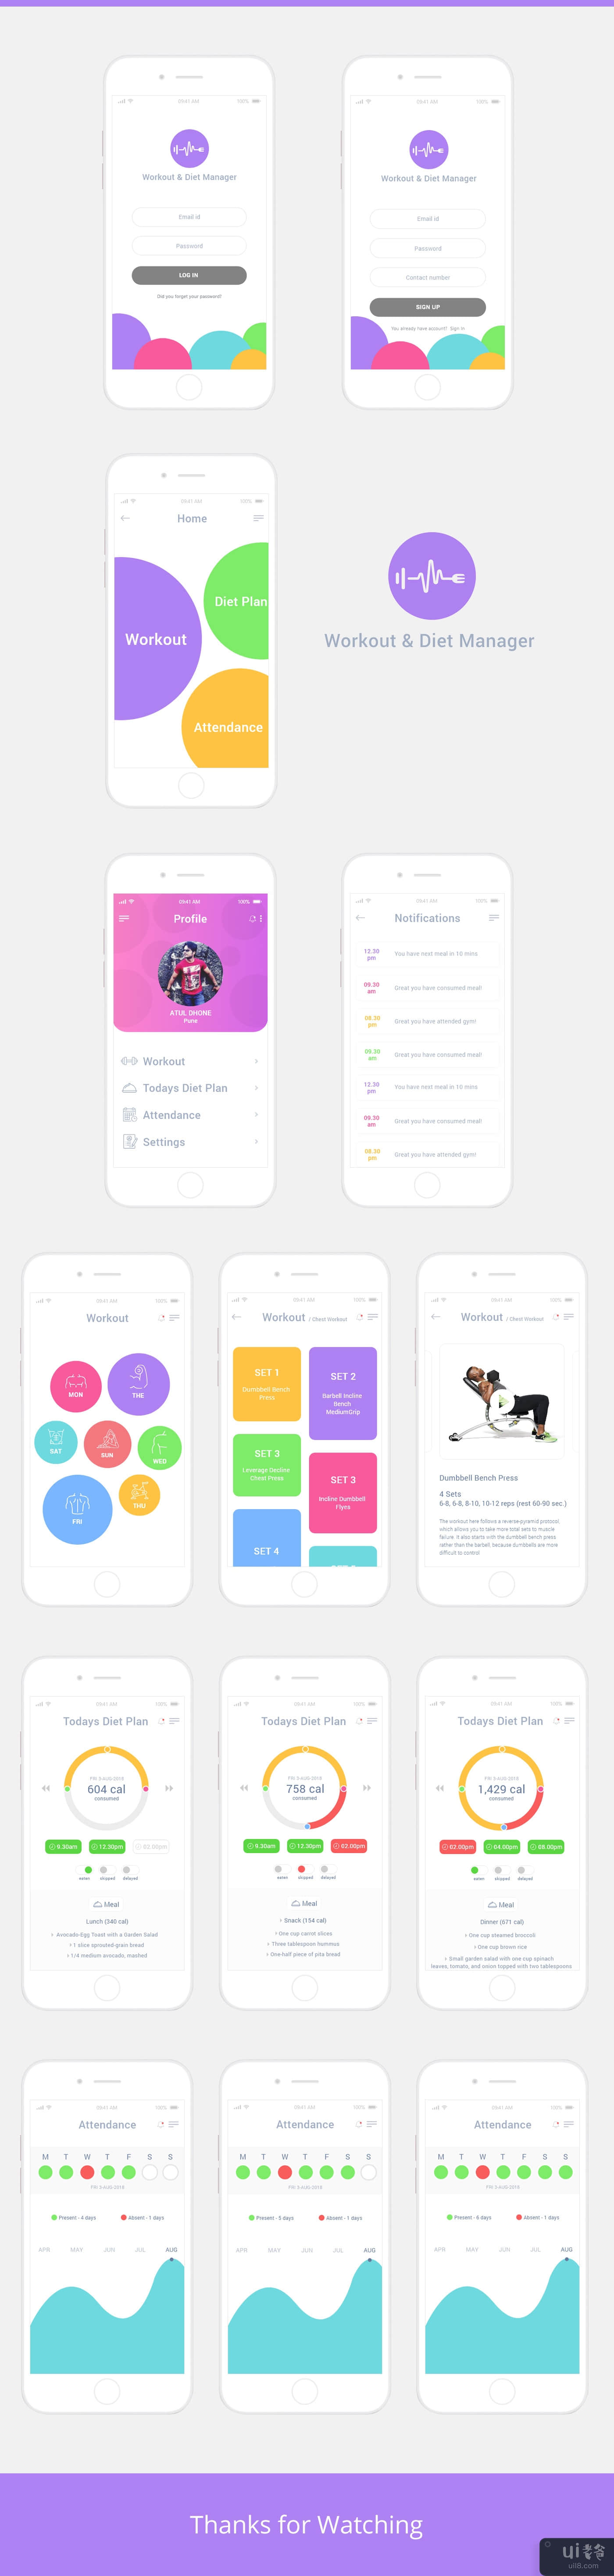 锻炼和饮食管理器 iOS 应用程序设计(Workout & Diet Manager iOS App Design)插图